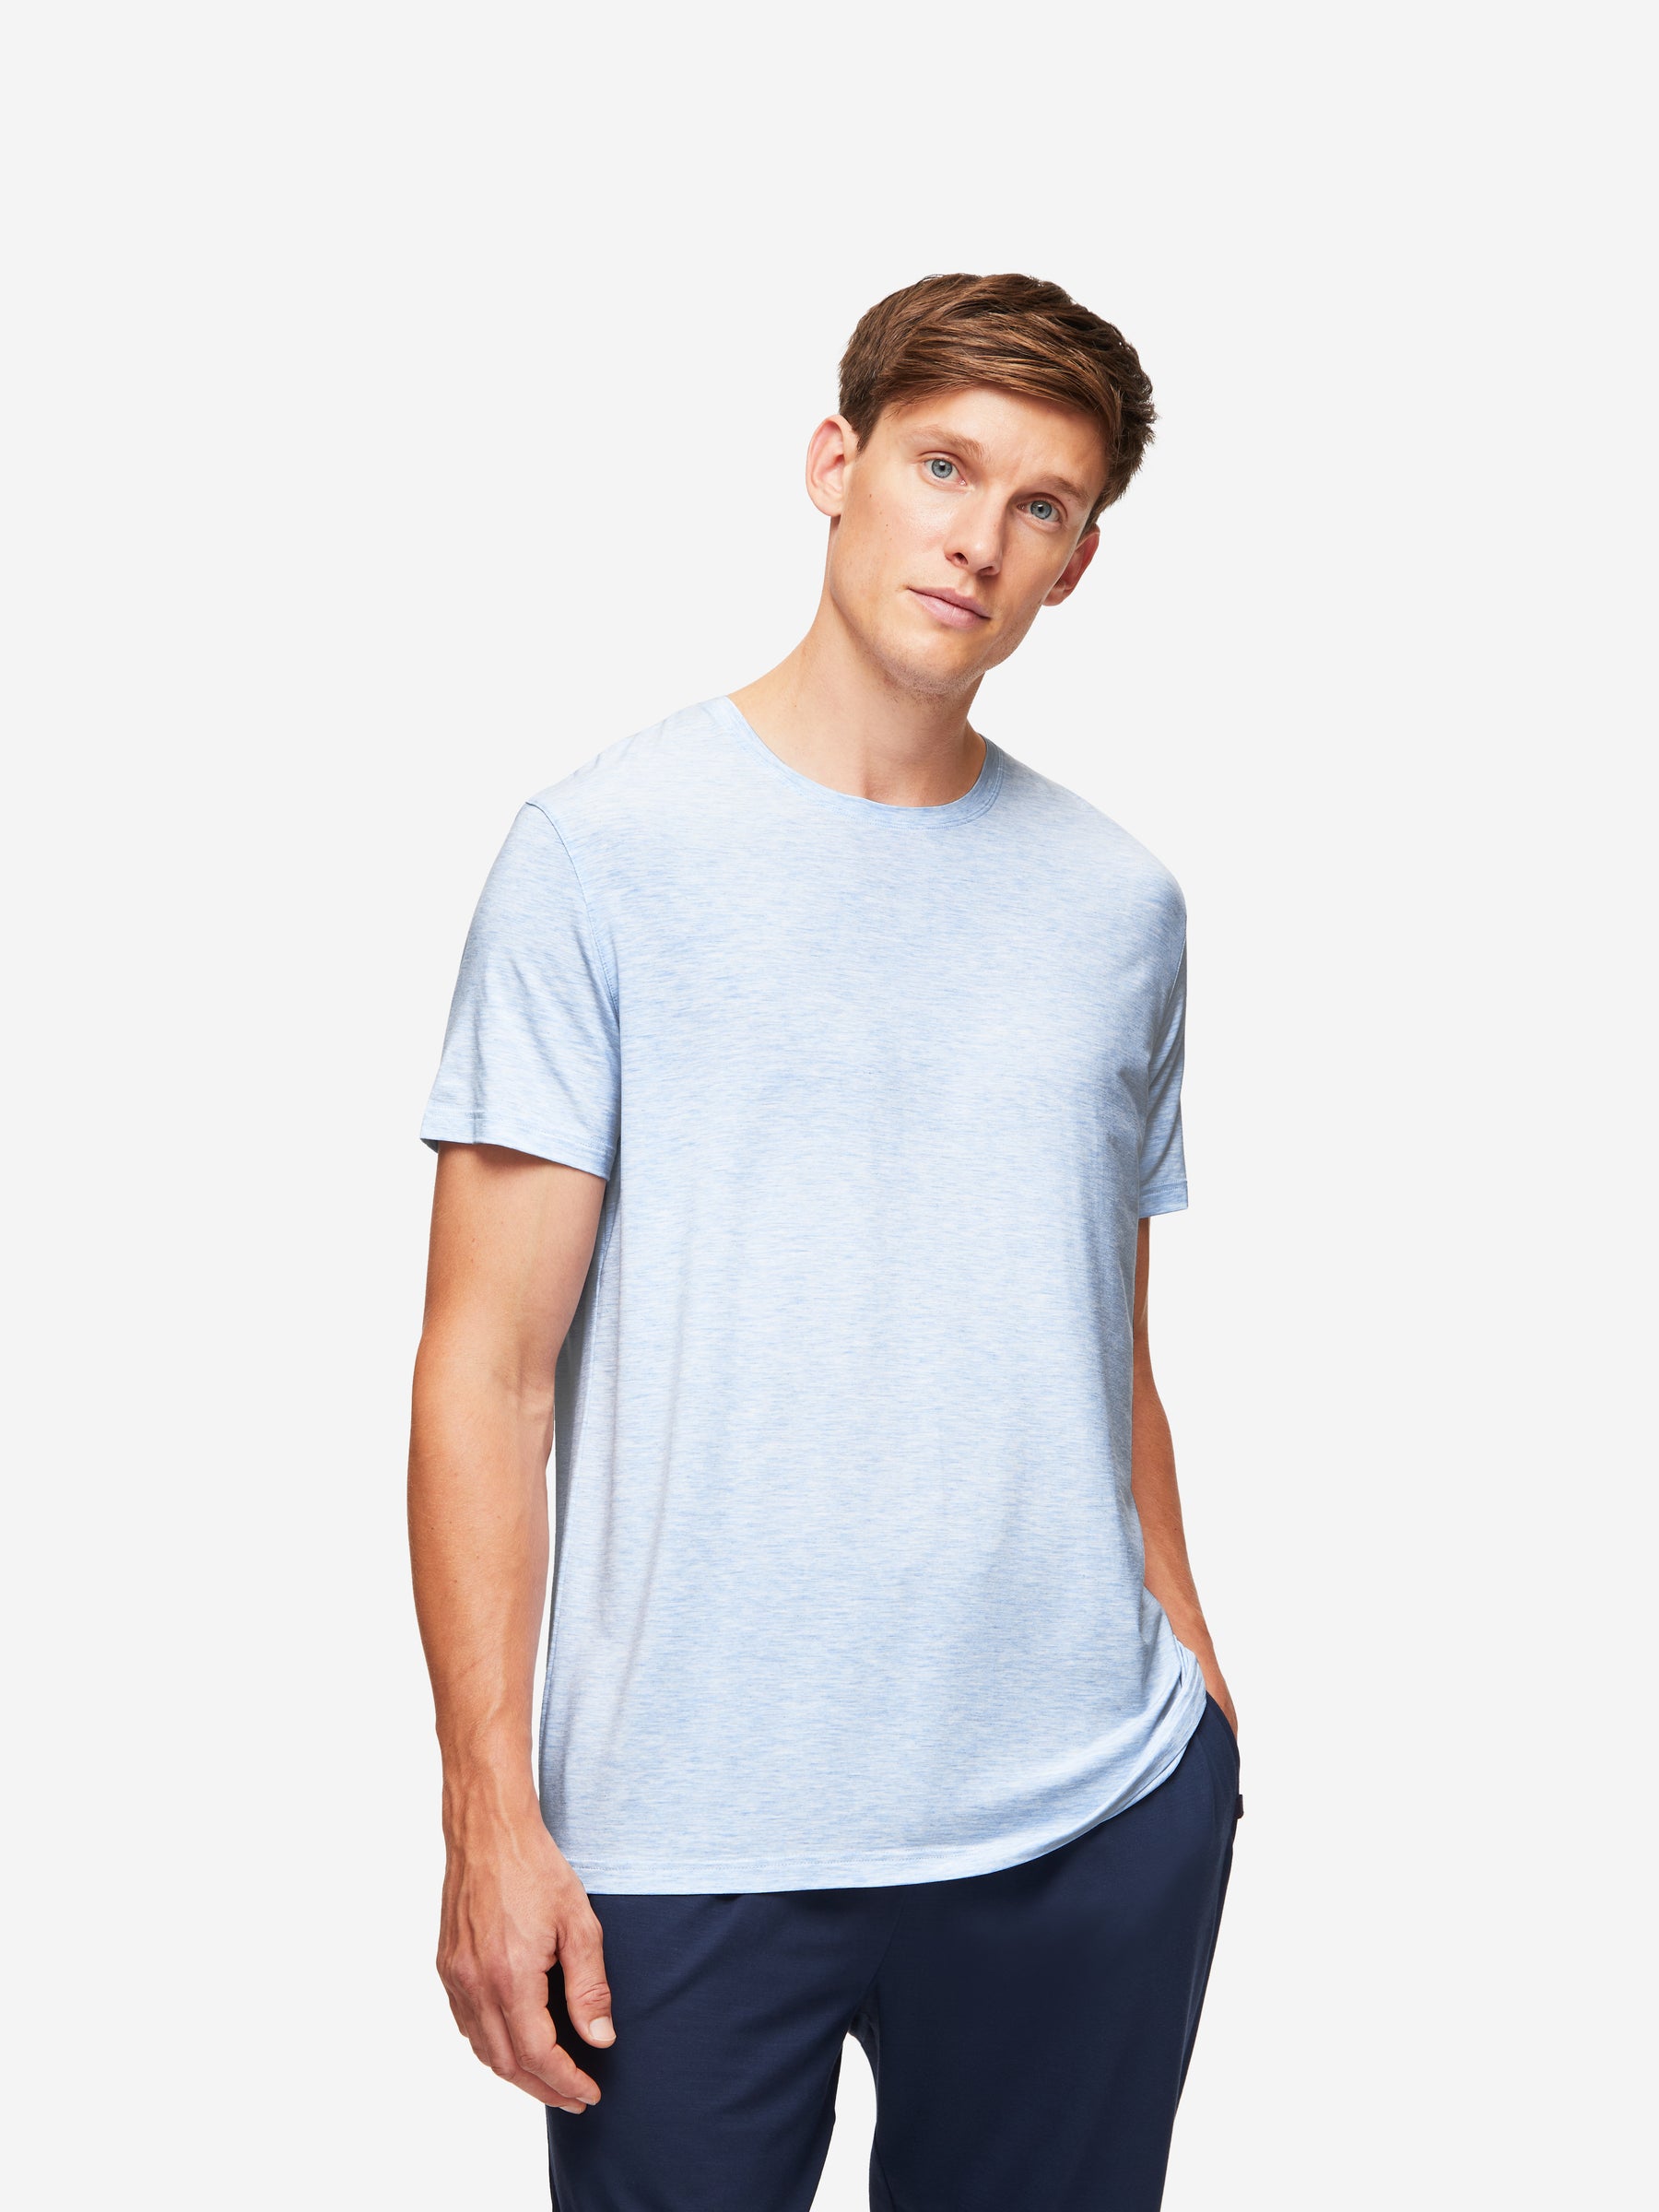 Men's T-Shirt Ethan Micro Modal Stretch Blue